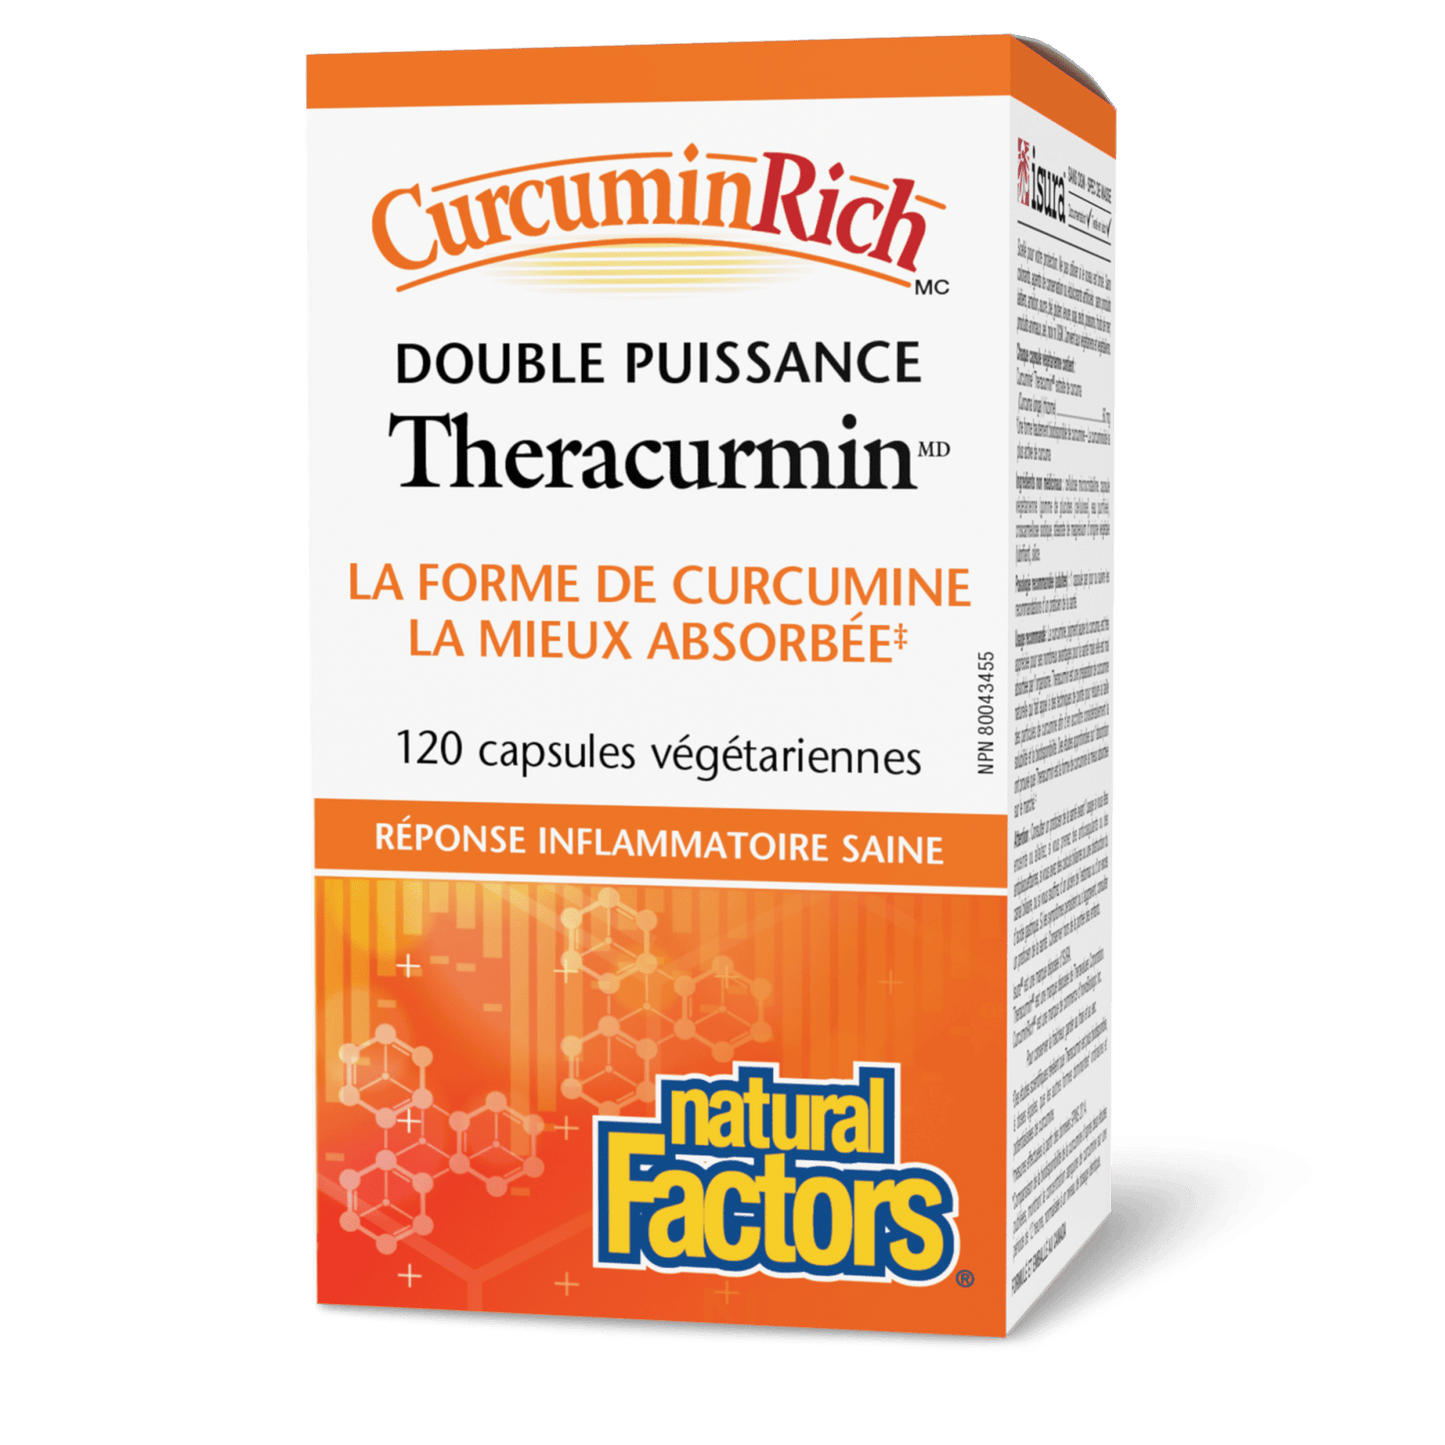 Theracurmin Double puissance, CurcuminRich, Natural Factors|v|image|4548